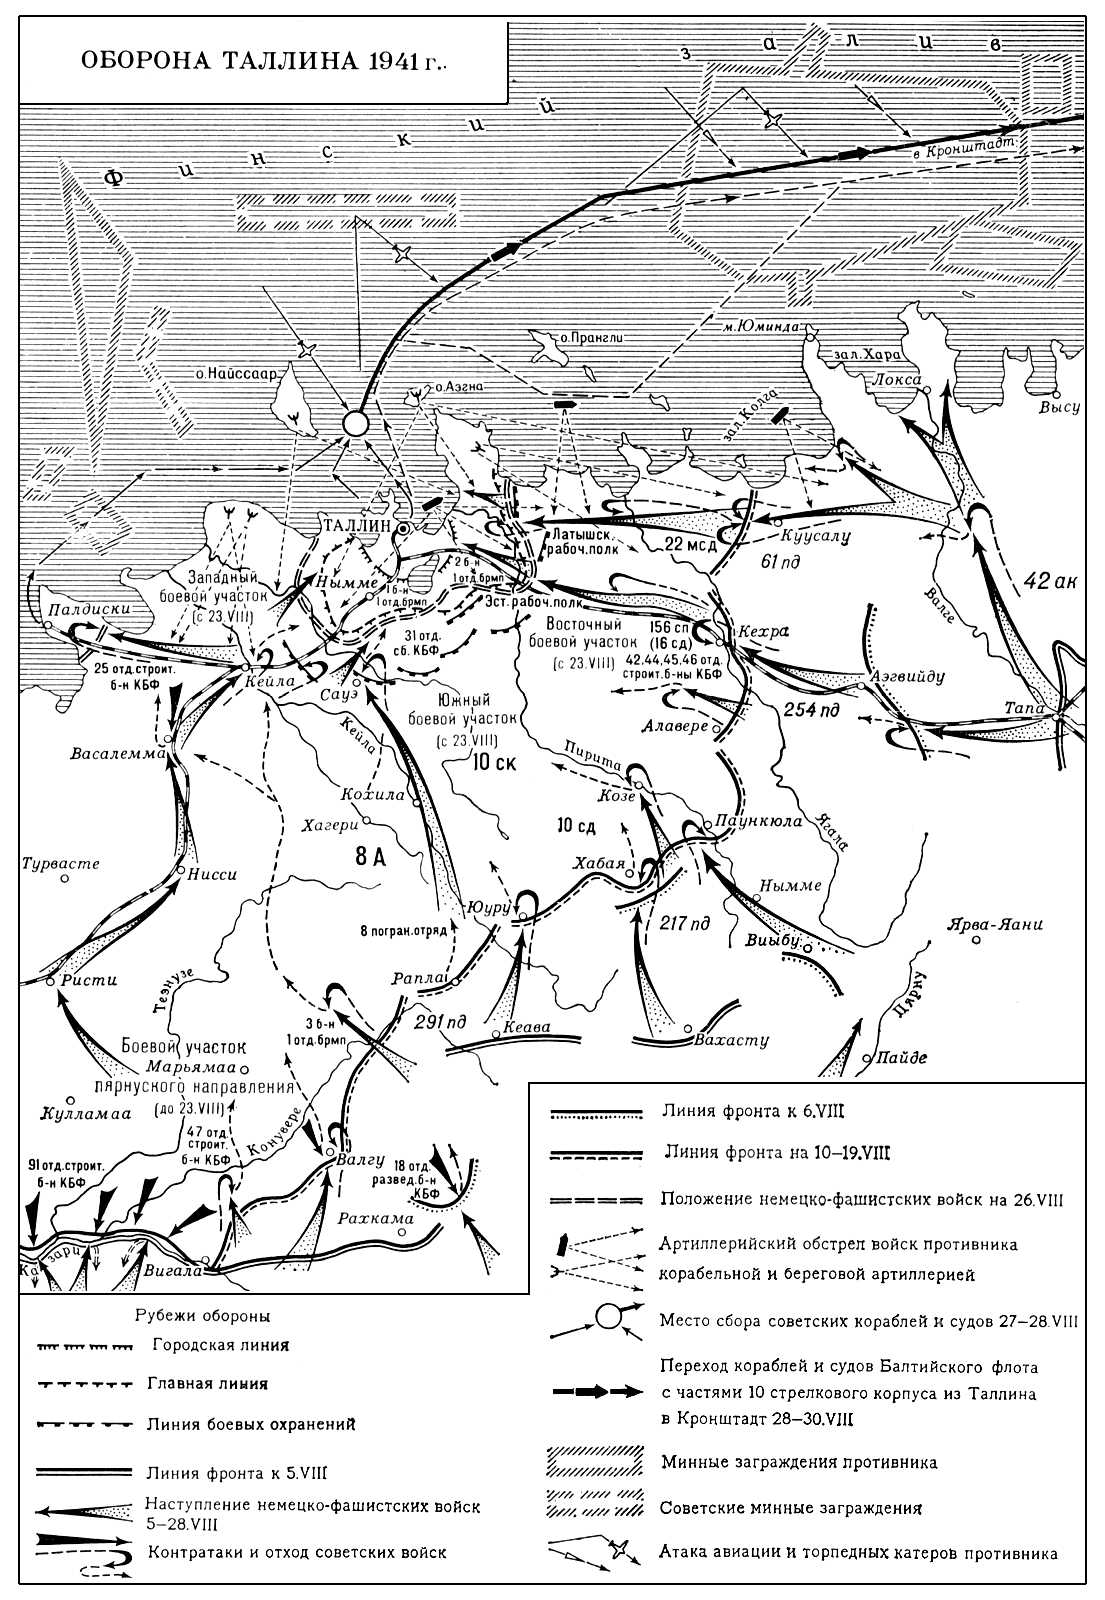 Таллина оборона 1941 г. (карта)